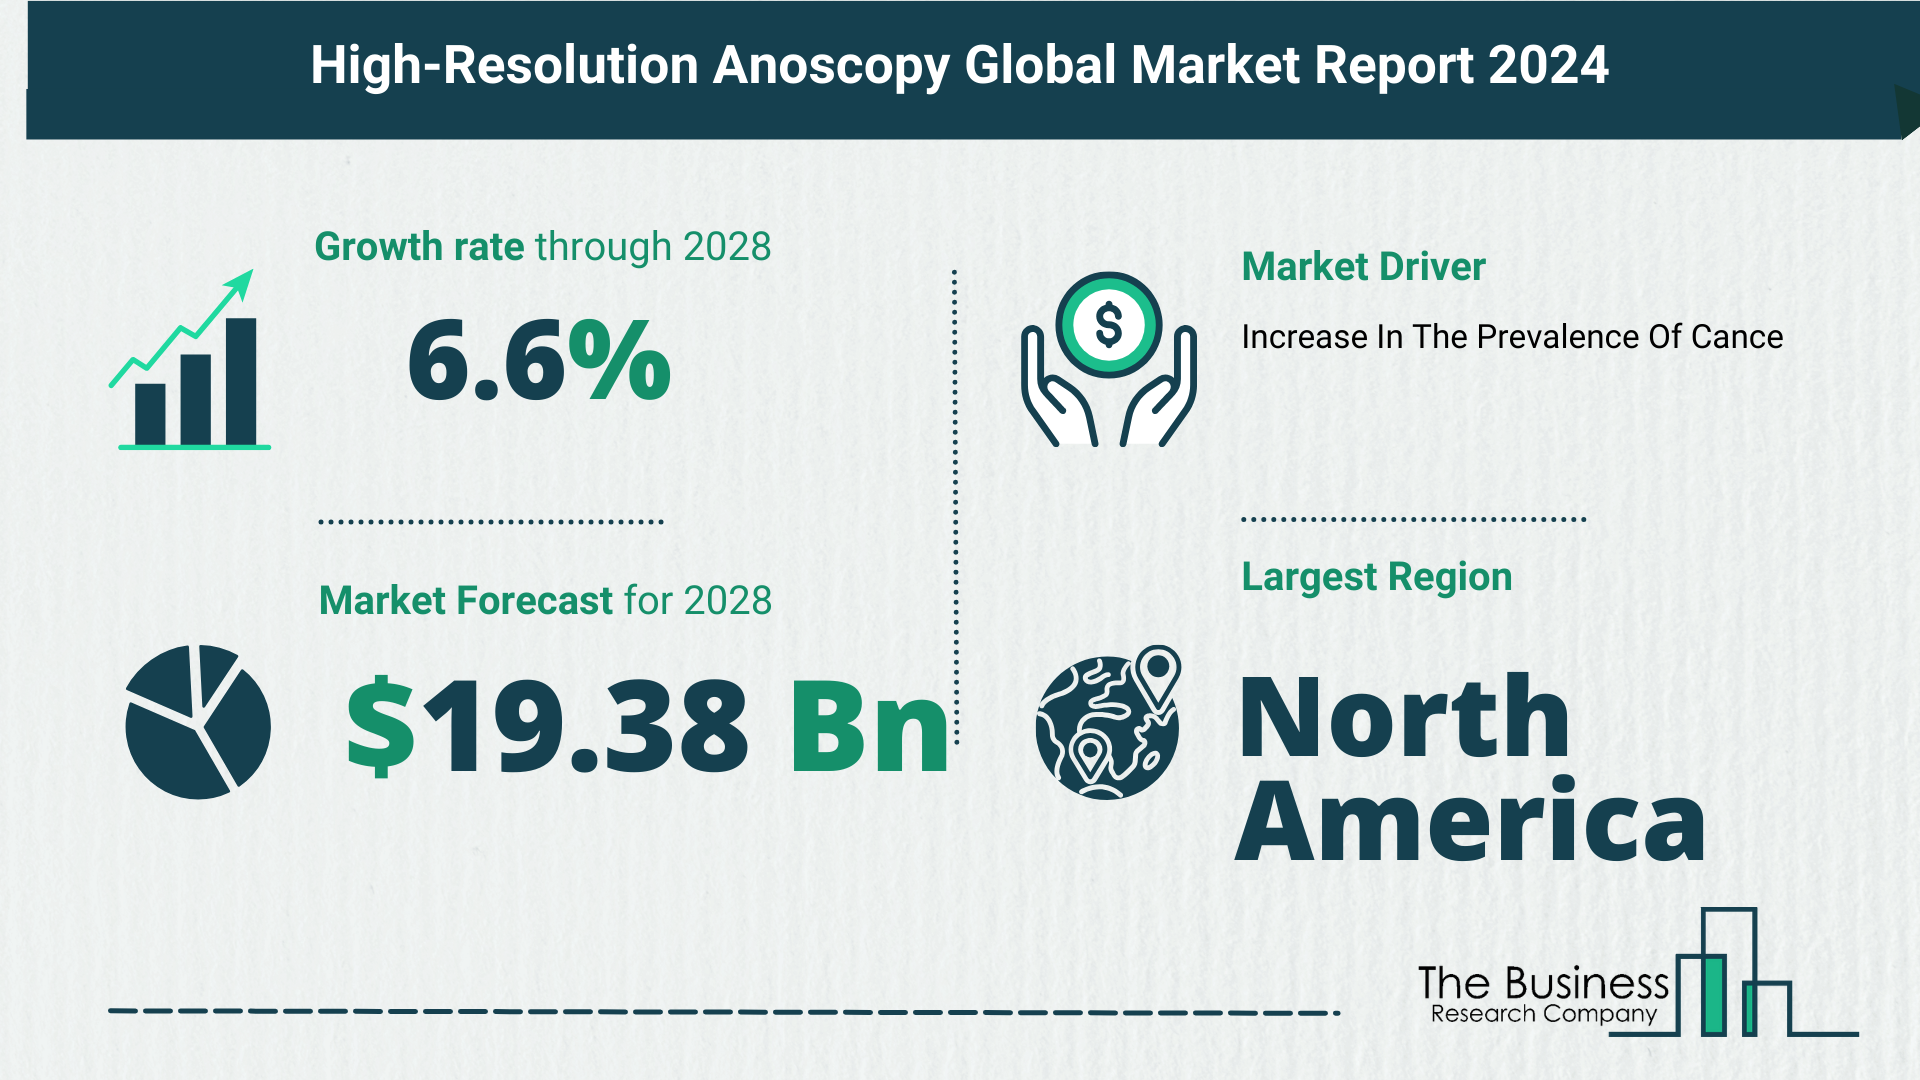 Global High-Resolution Anoscopy Market